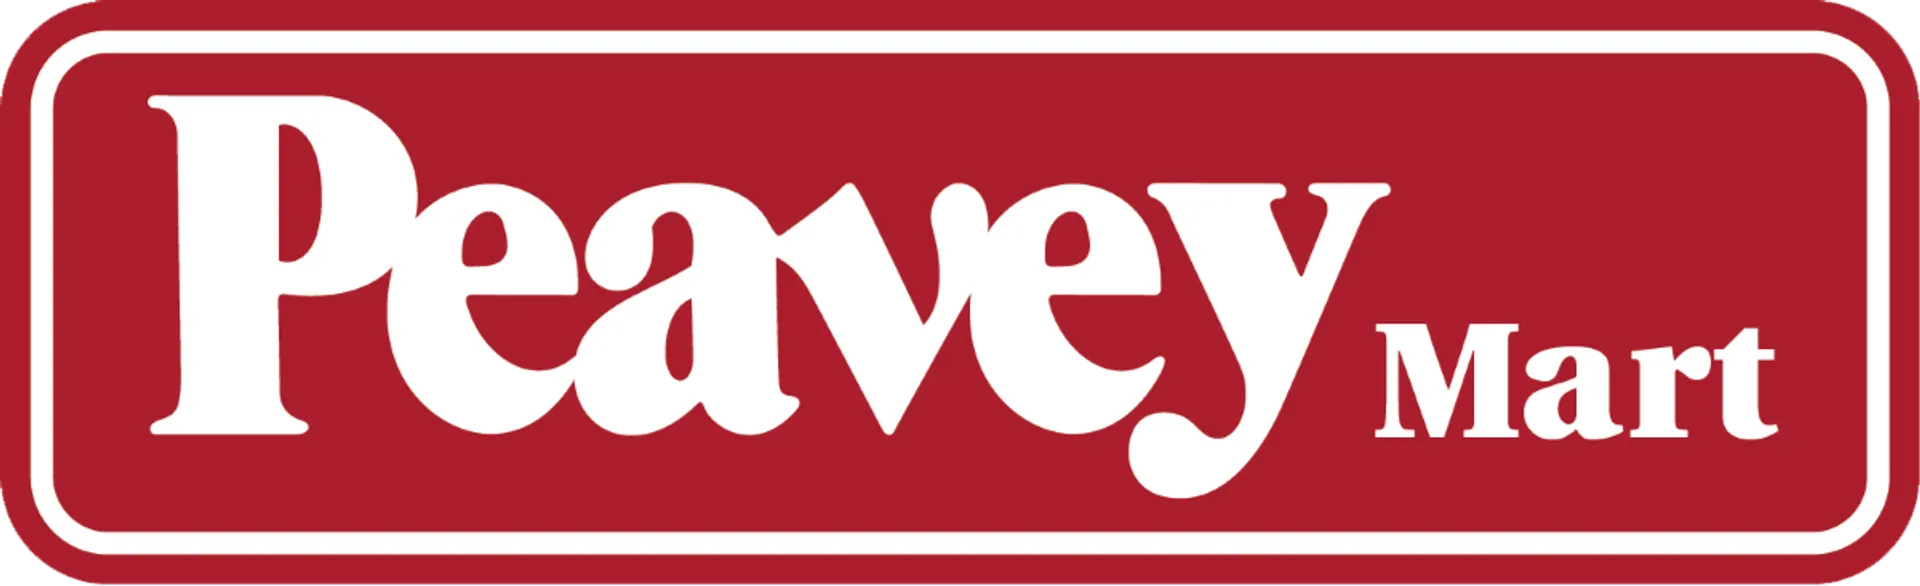 PEAVEY MART logo